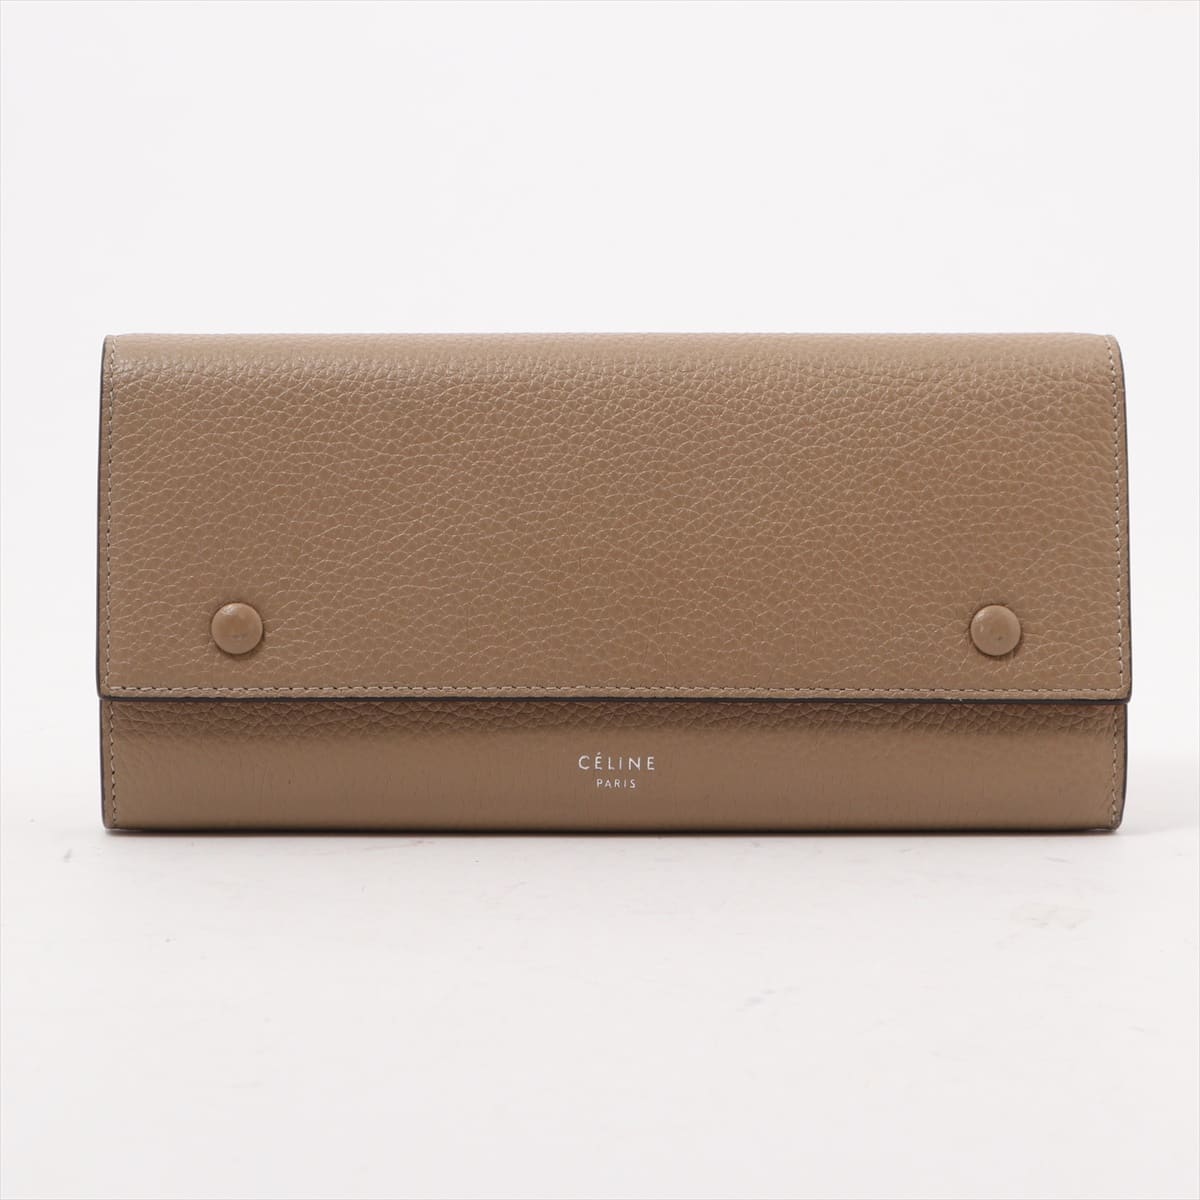 CELINE Large Flap Multi Function Leather Wallet Beige